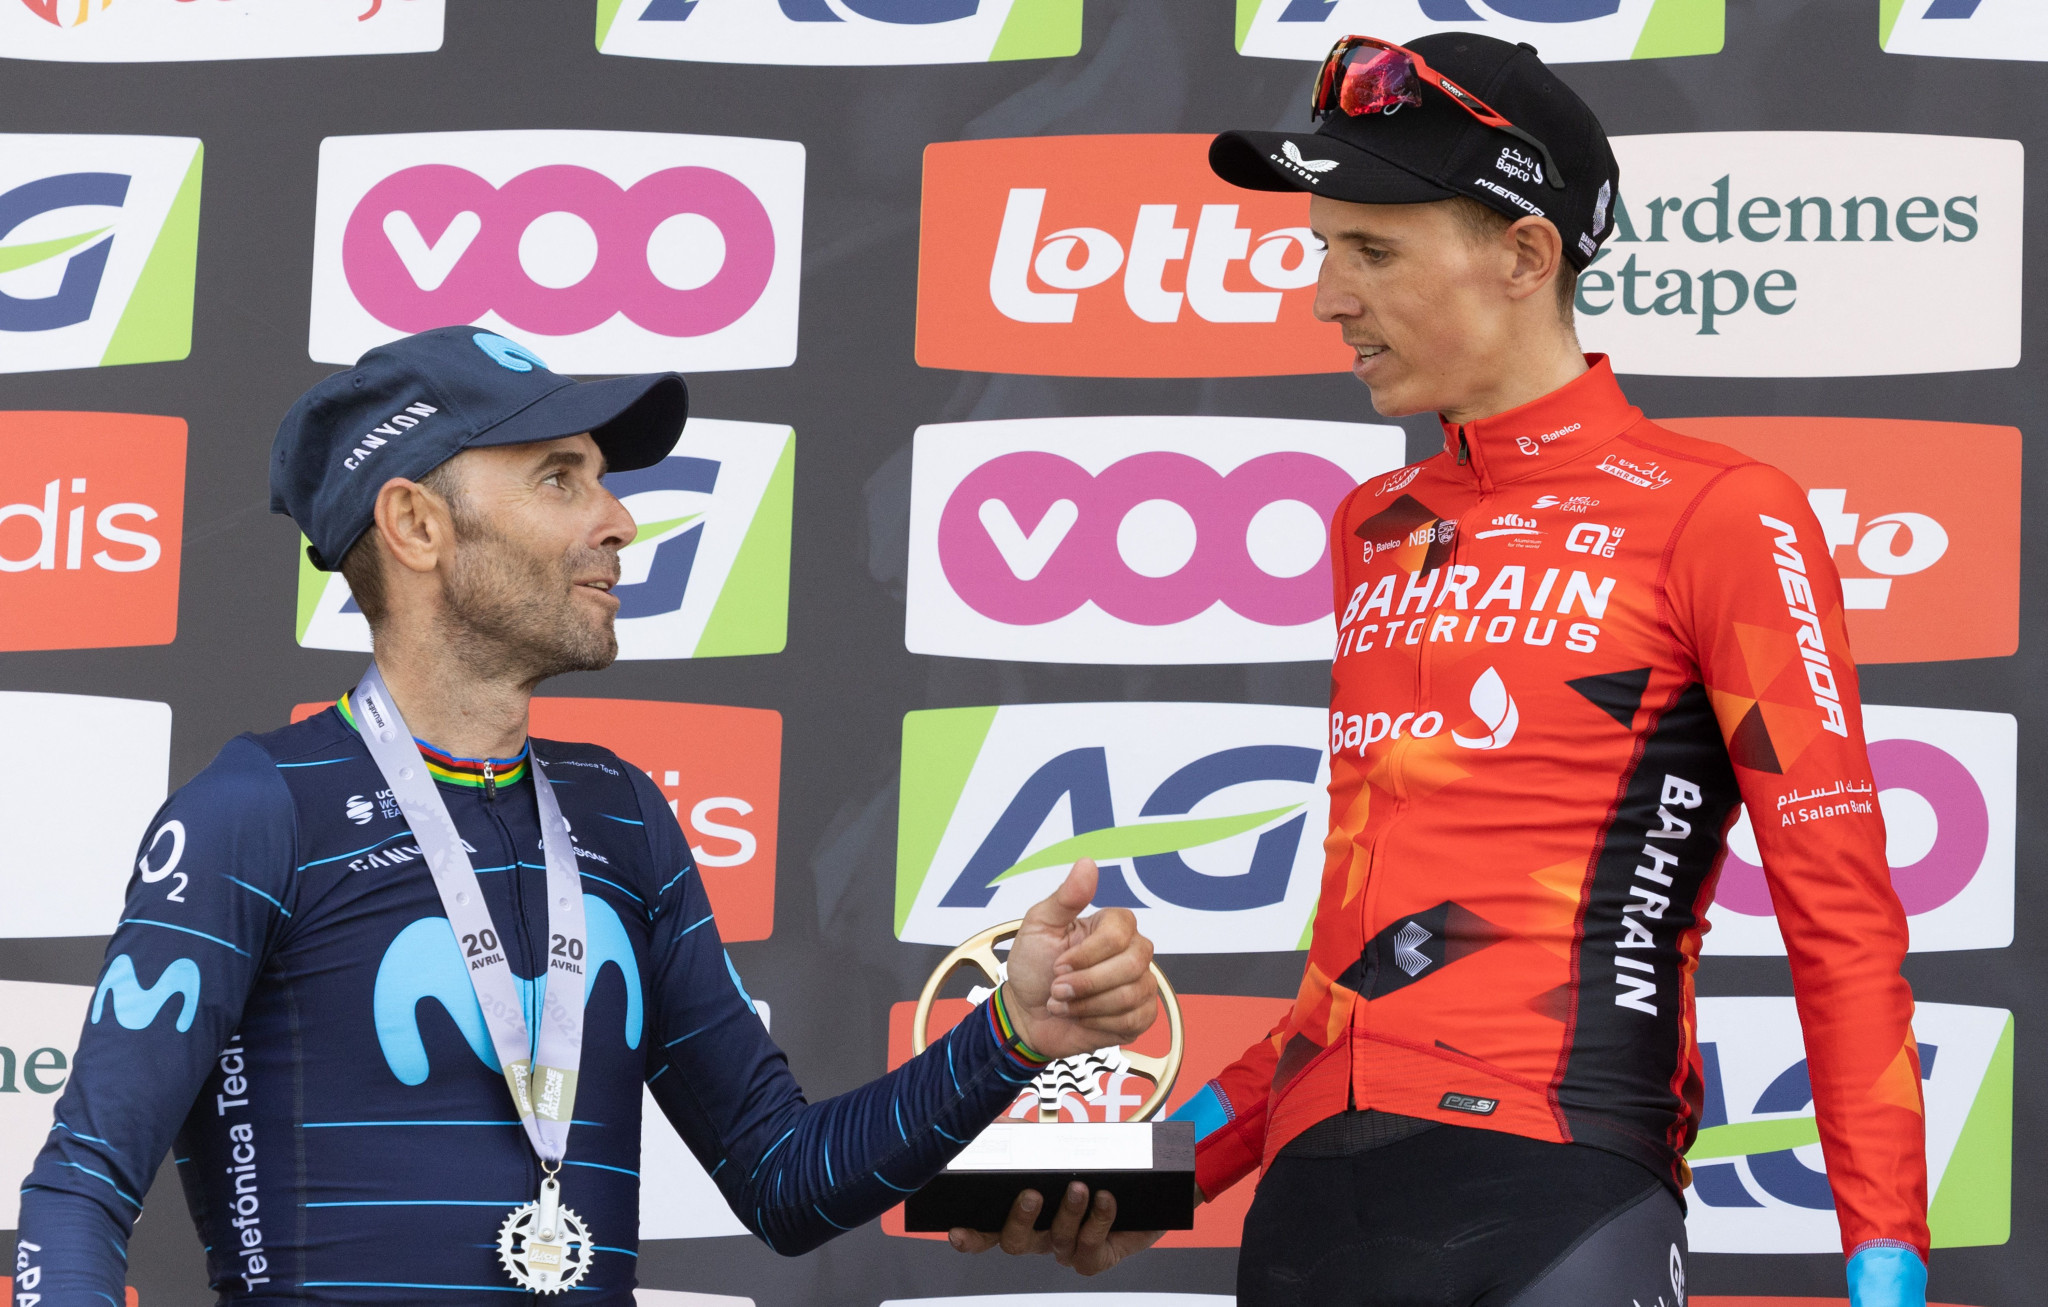 Teuns denies Valverde final Flèche Wallonne triumph